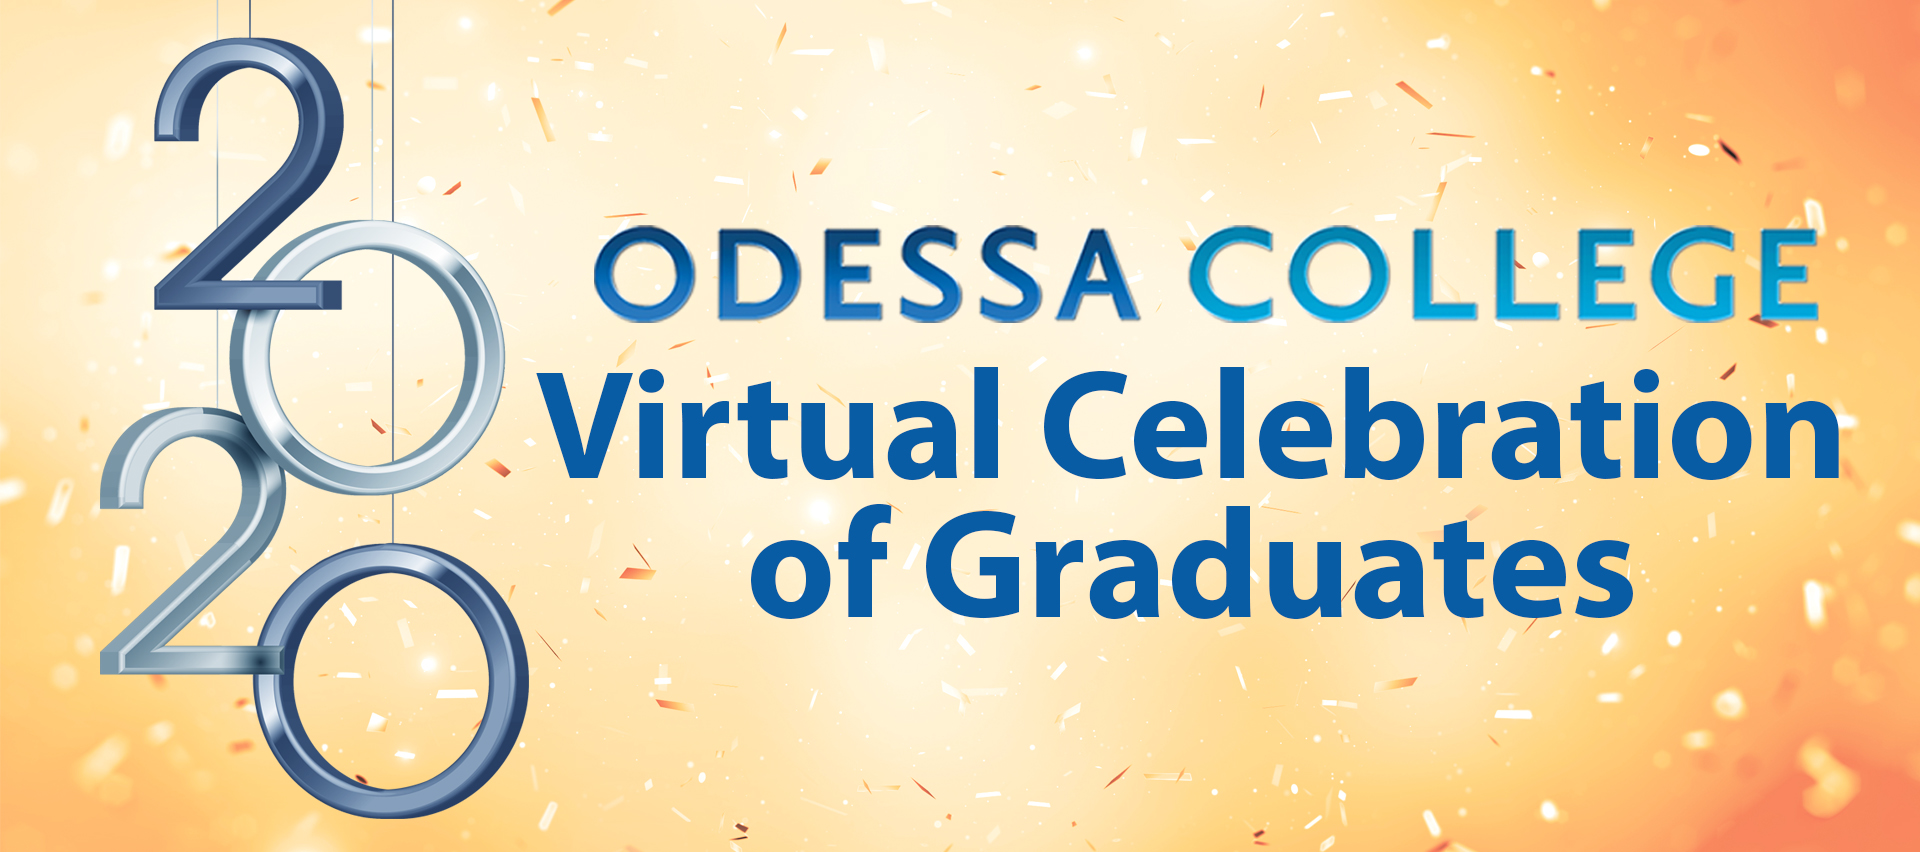 Graduates-Virtual-Celebration-WebBanner.jpg